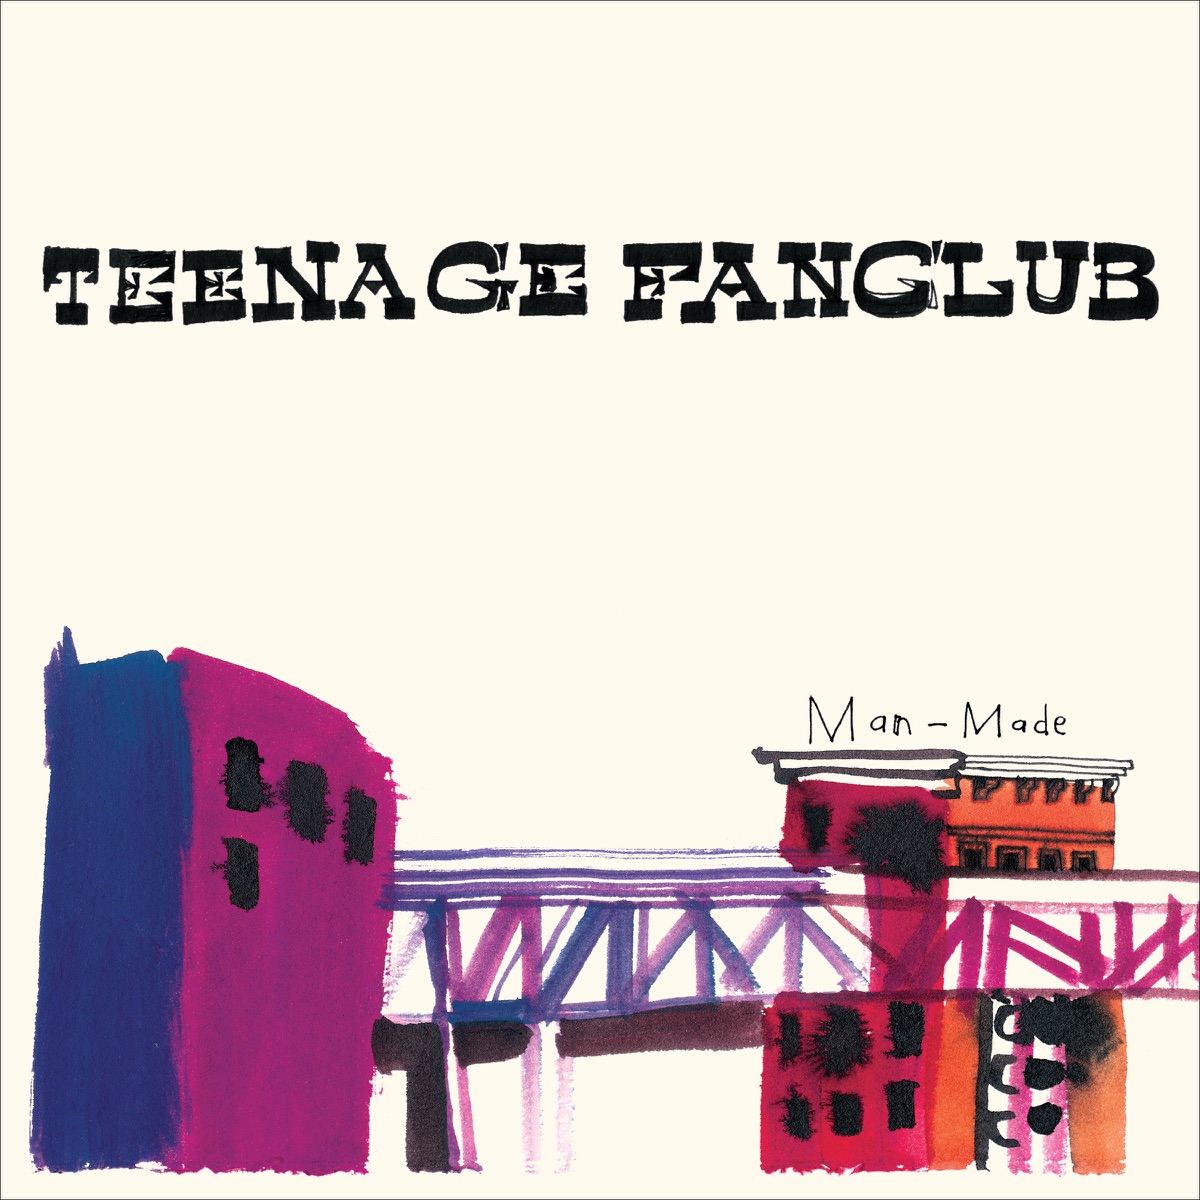 Grand Prix - Album by Teenage Fanclub - Apple Music